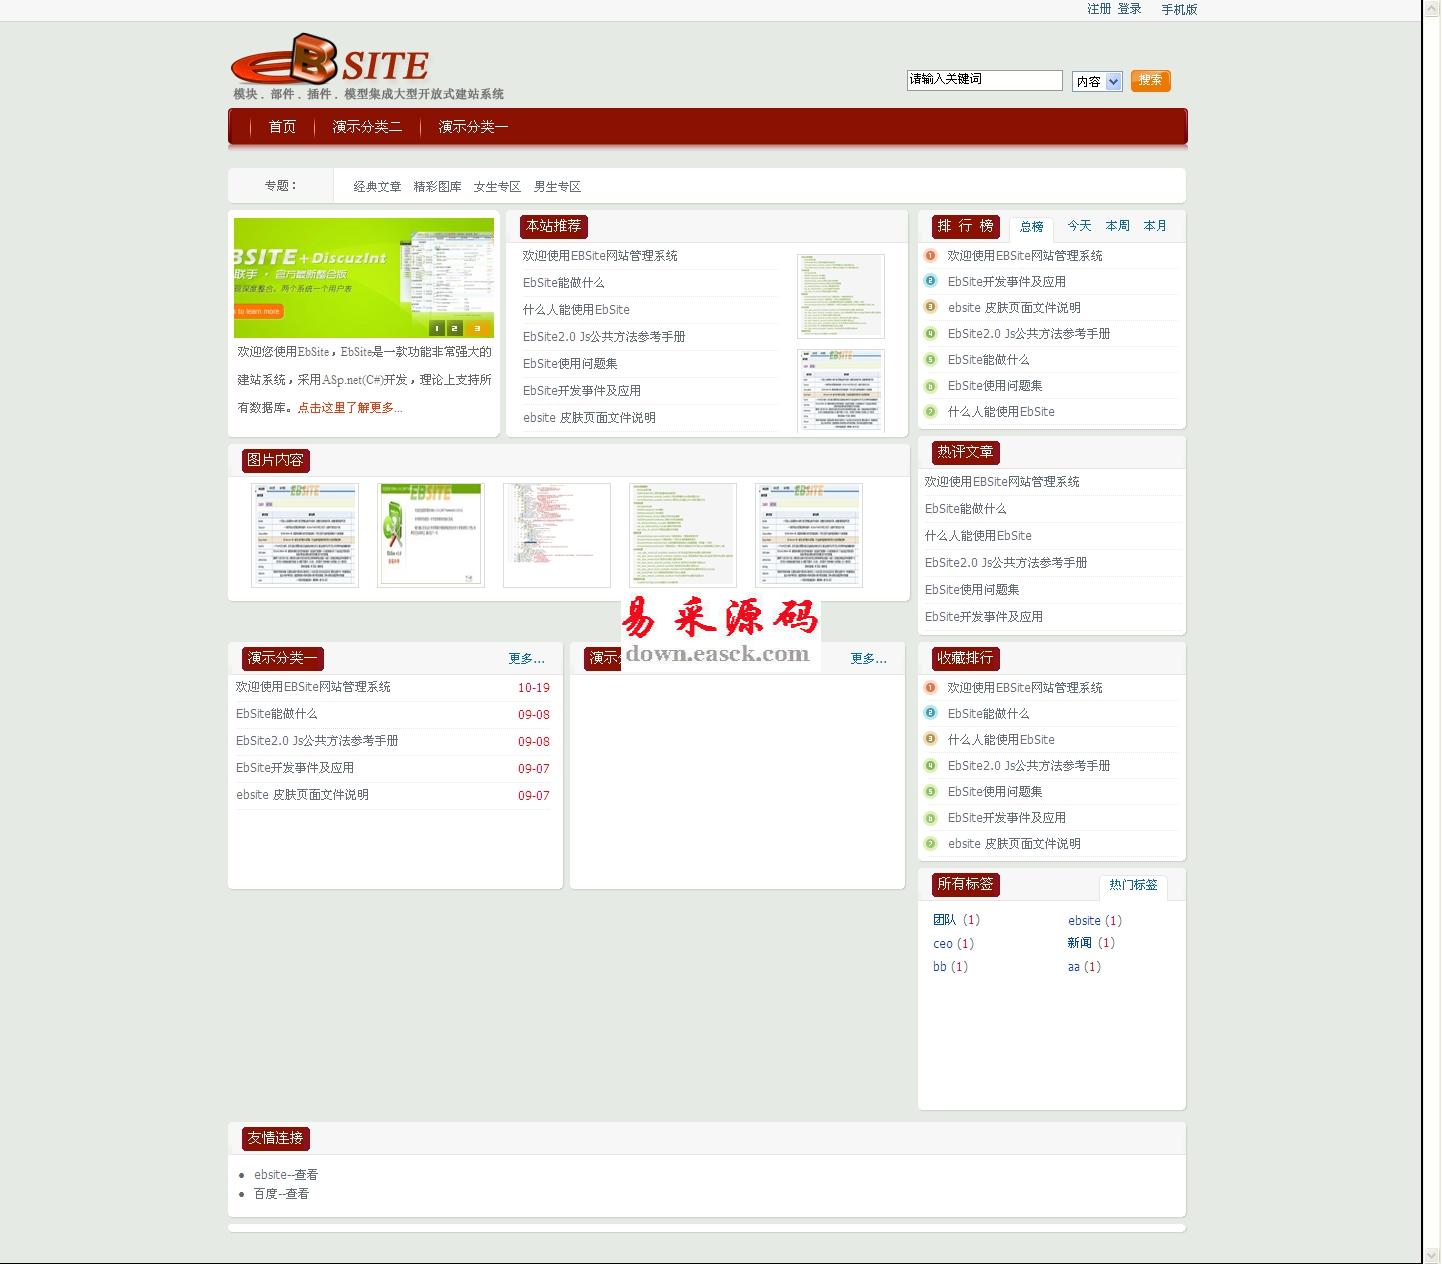 eBSite 网站管理系统 v2.0